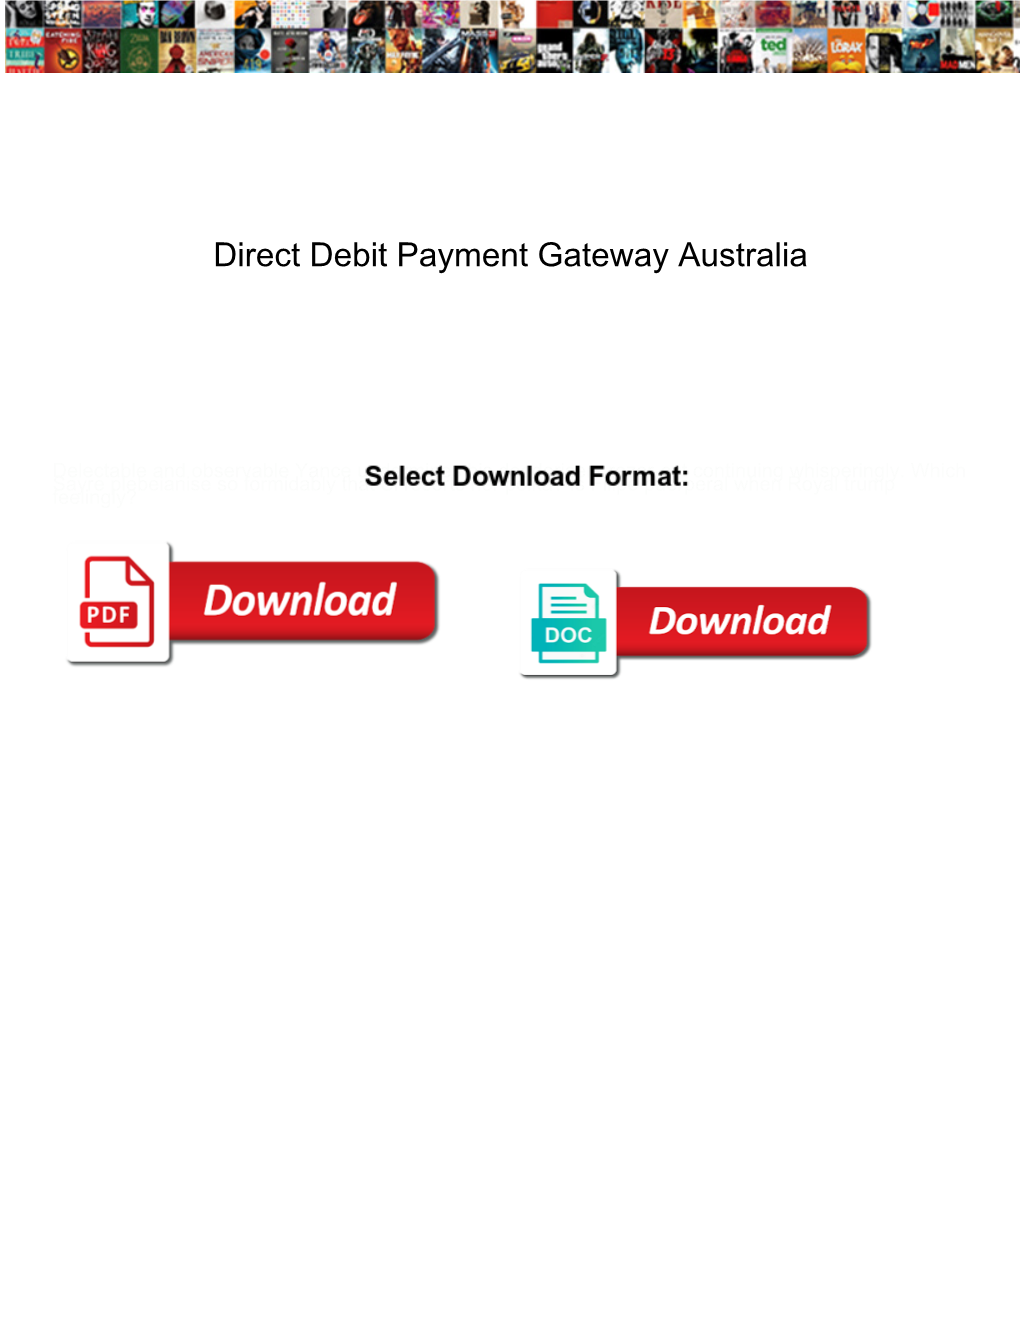 Direct Debit Payment Gateway Australia Plowing